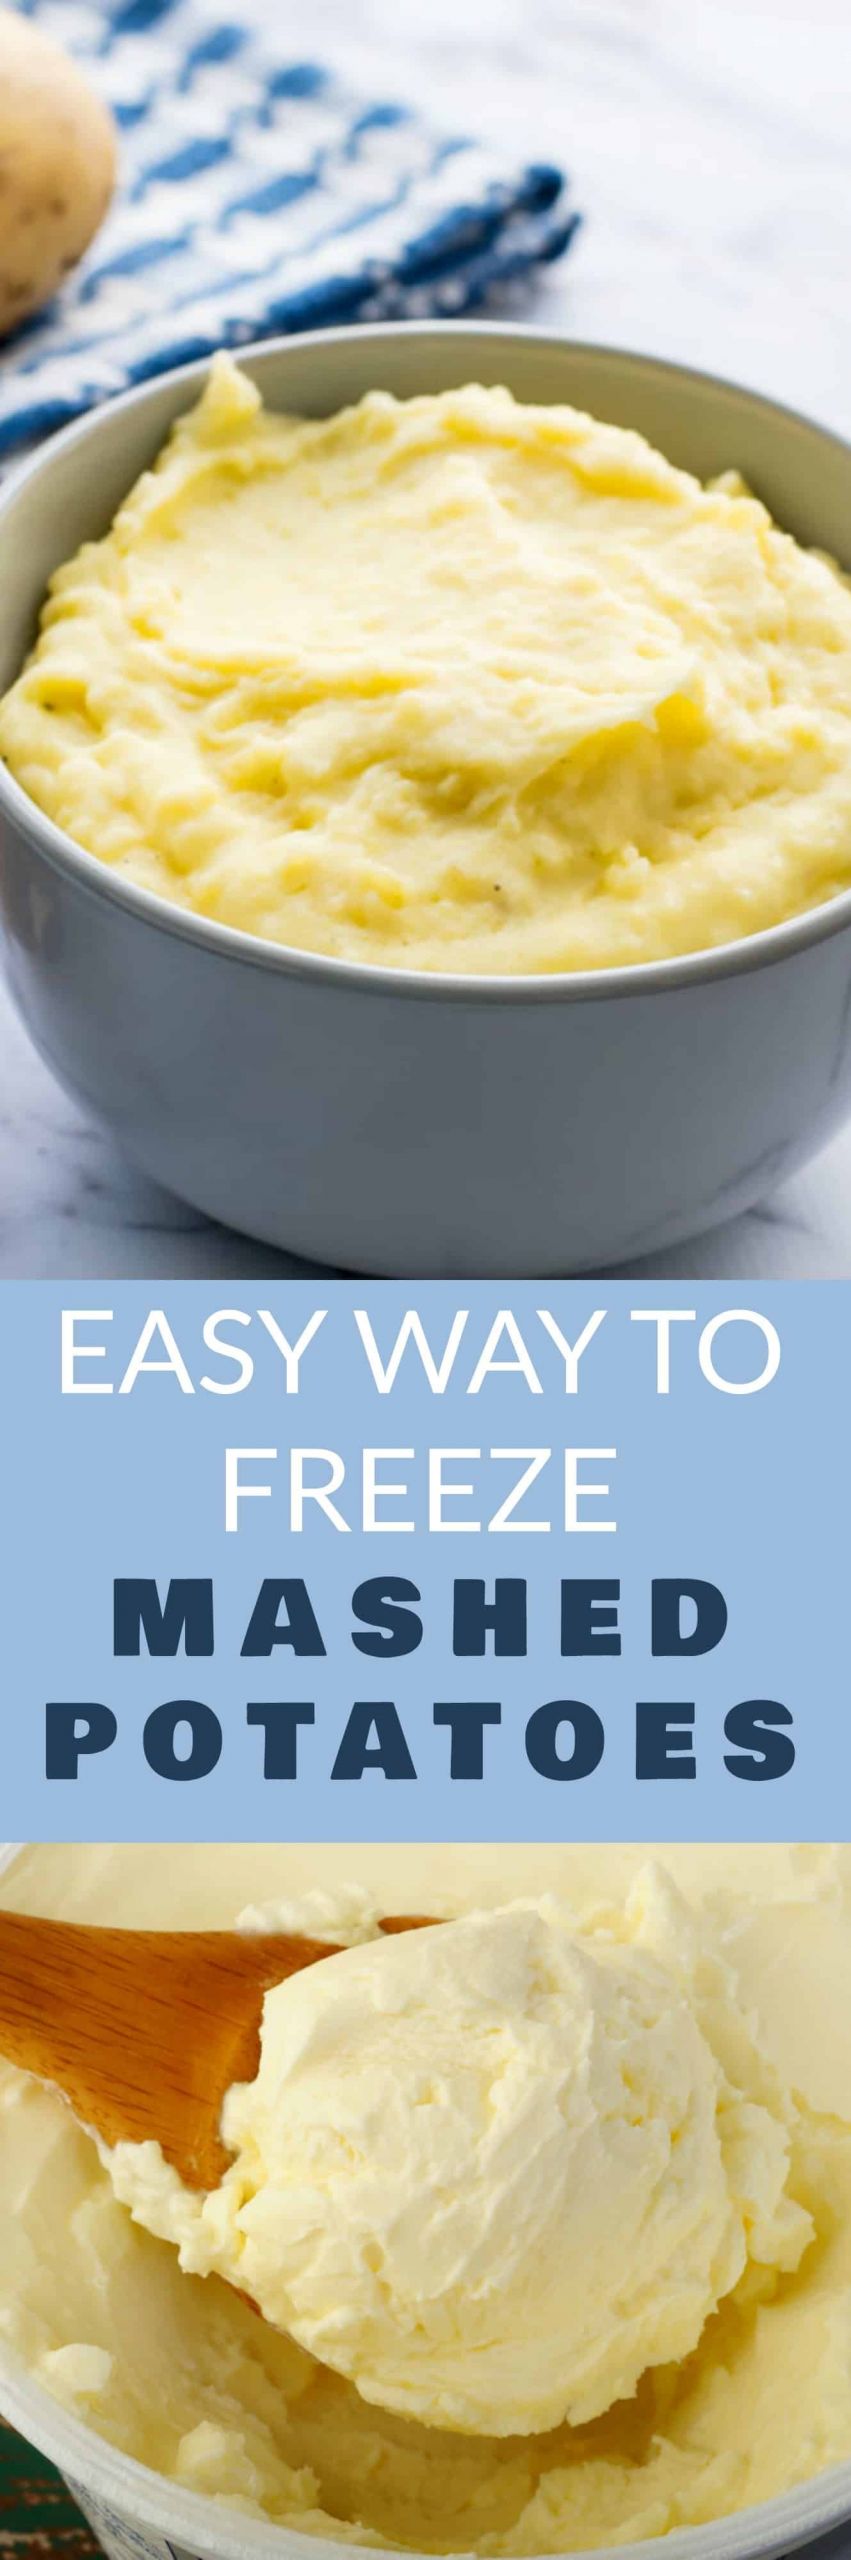 Freezer Mashed Potatoes
 Easy Way to Freeze Mashed Potatoes Brooklyn Farm Girl